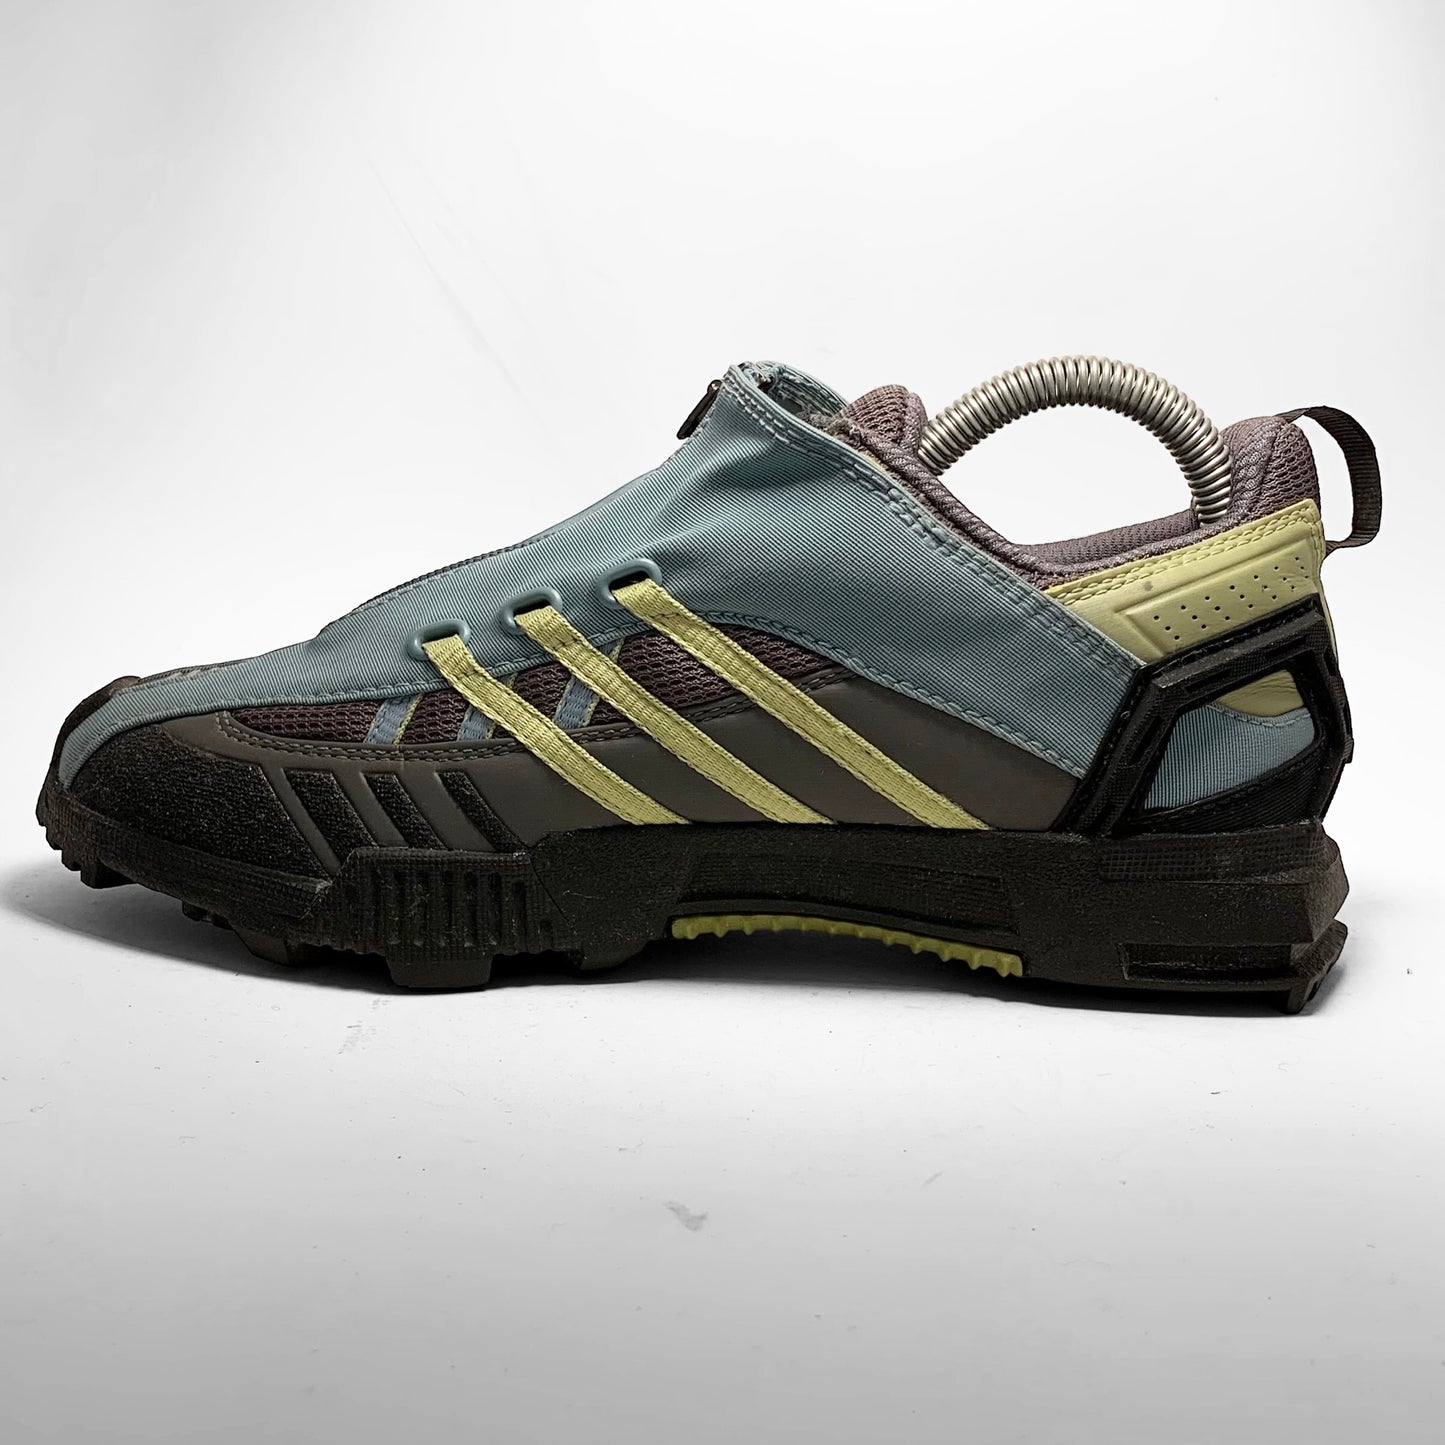 Adidas Pingora MTB (2001)